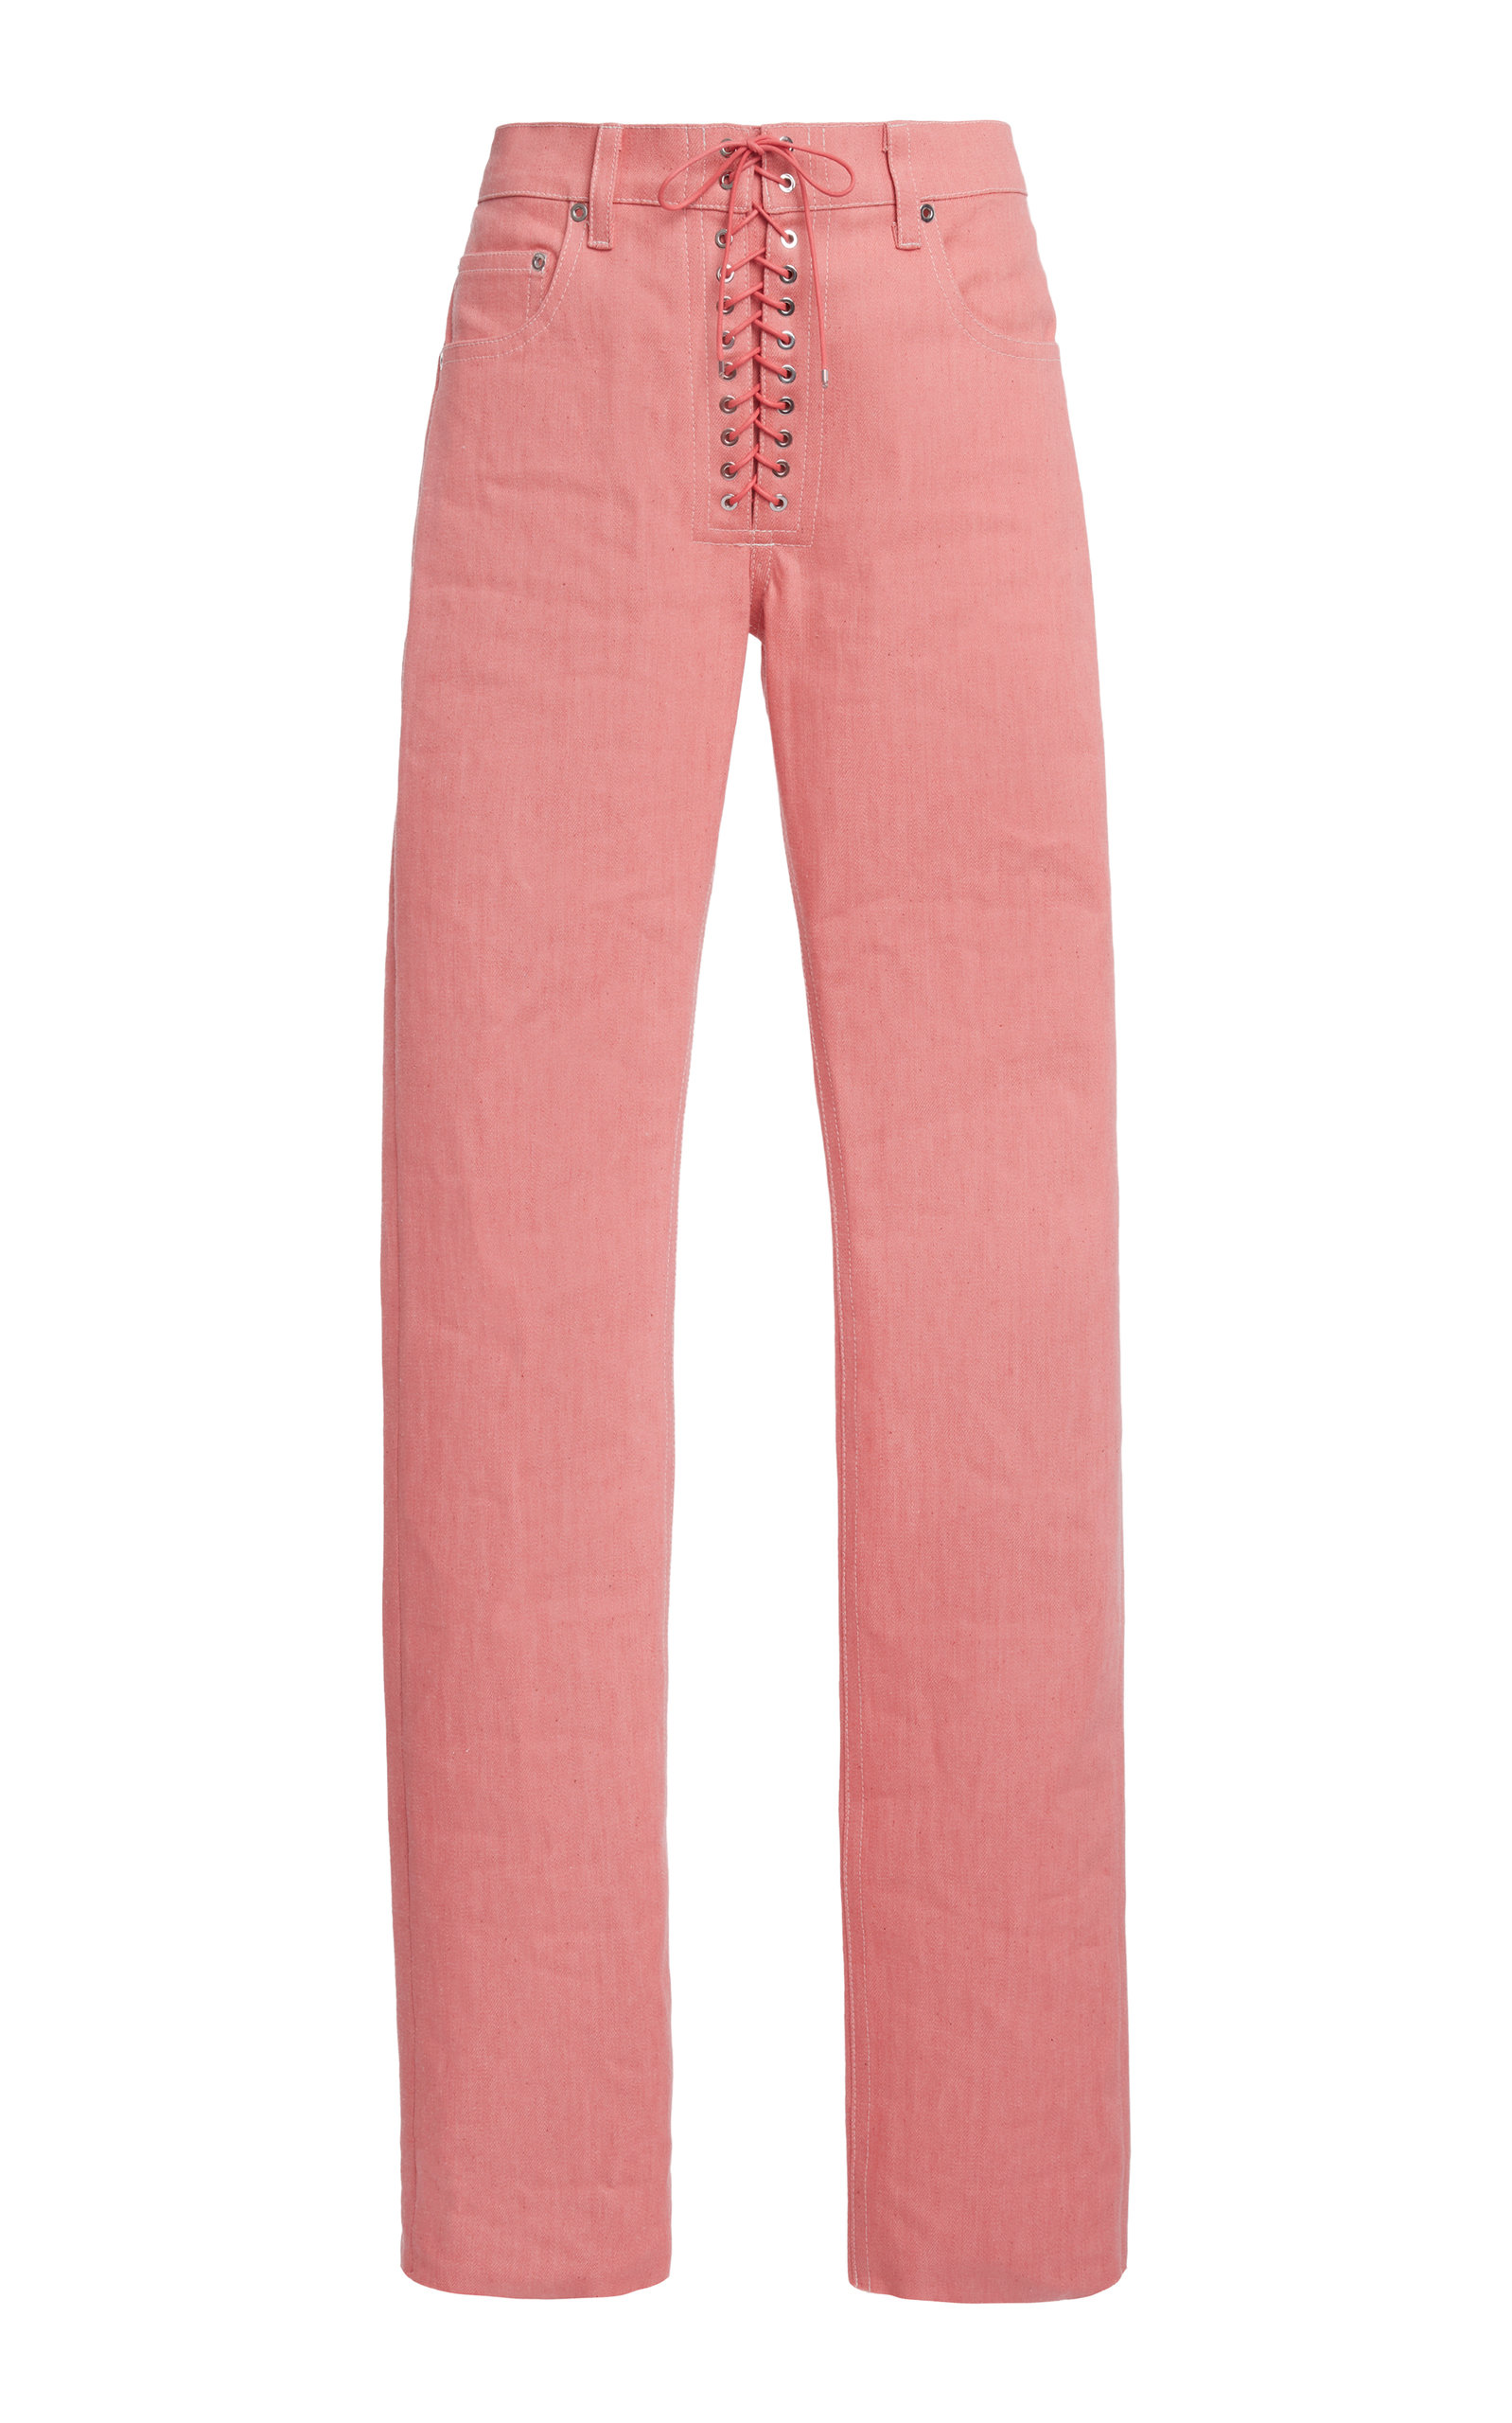 Ludovic de Saint Sernin - Women's Lace-Up Slim Jeans - Pink - S - Moda Operandi